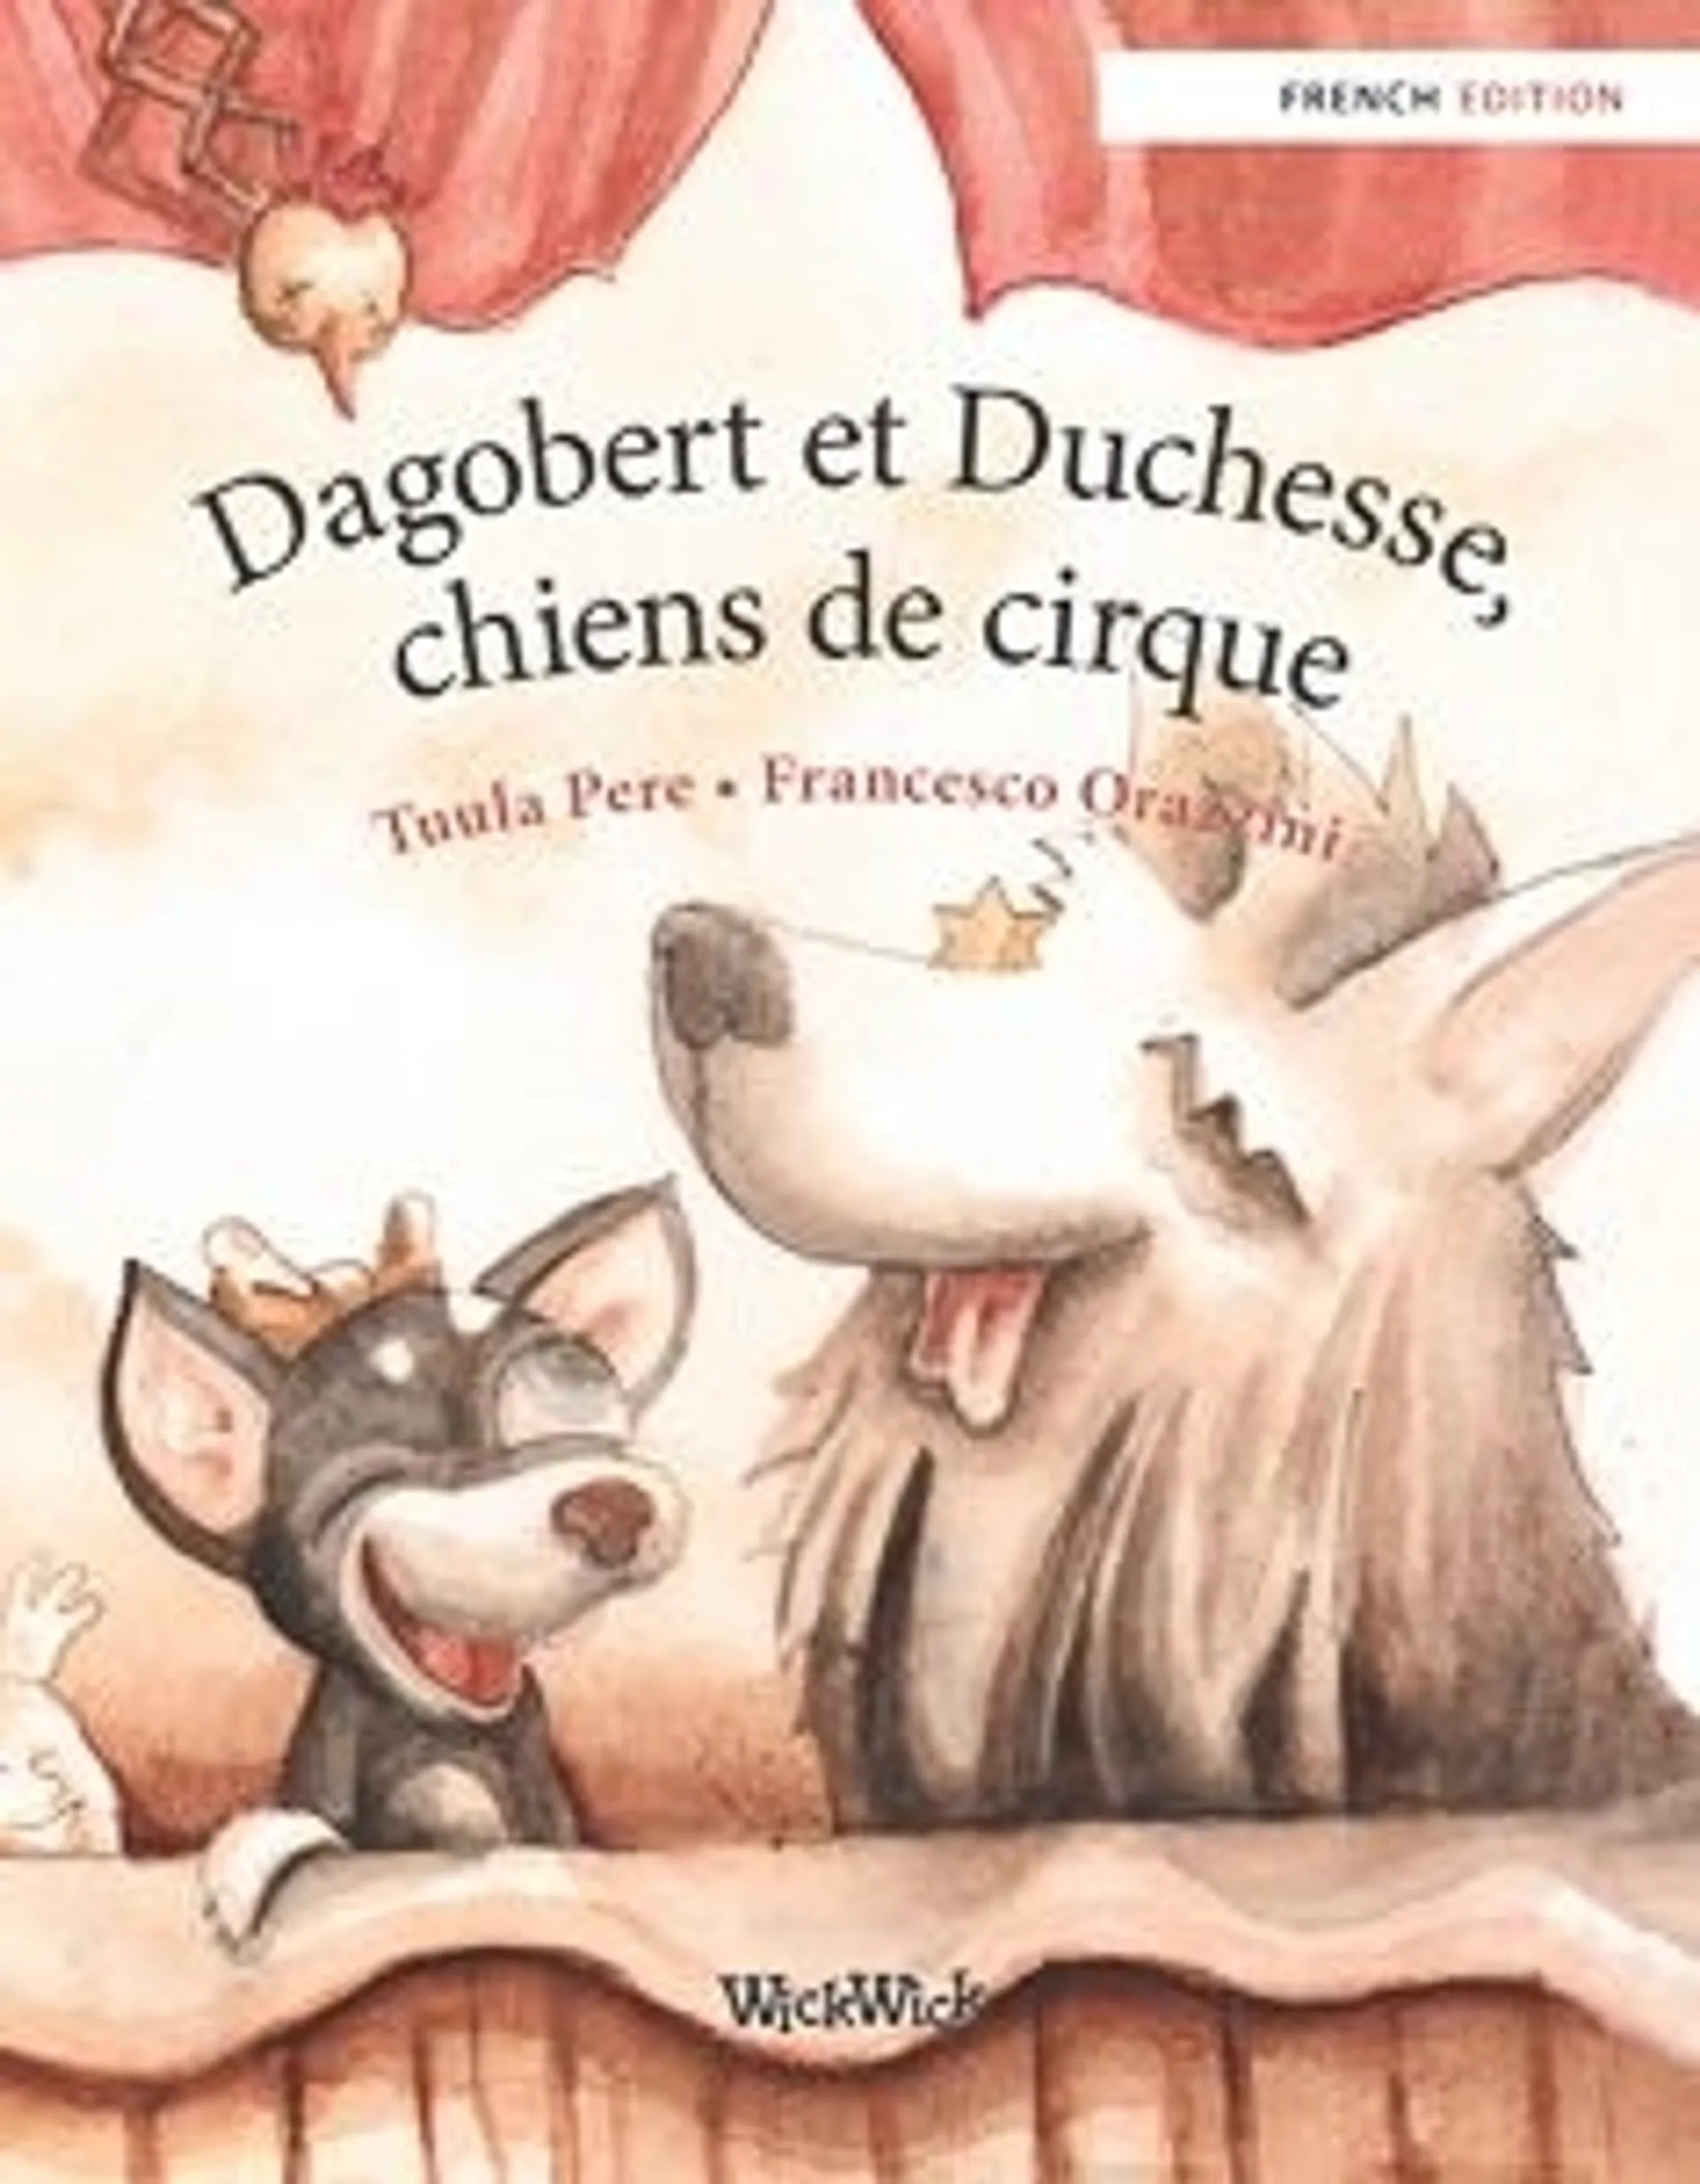 Pere, Dagobert et Duchesse, chiens de cirque